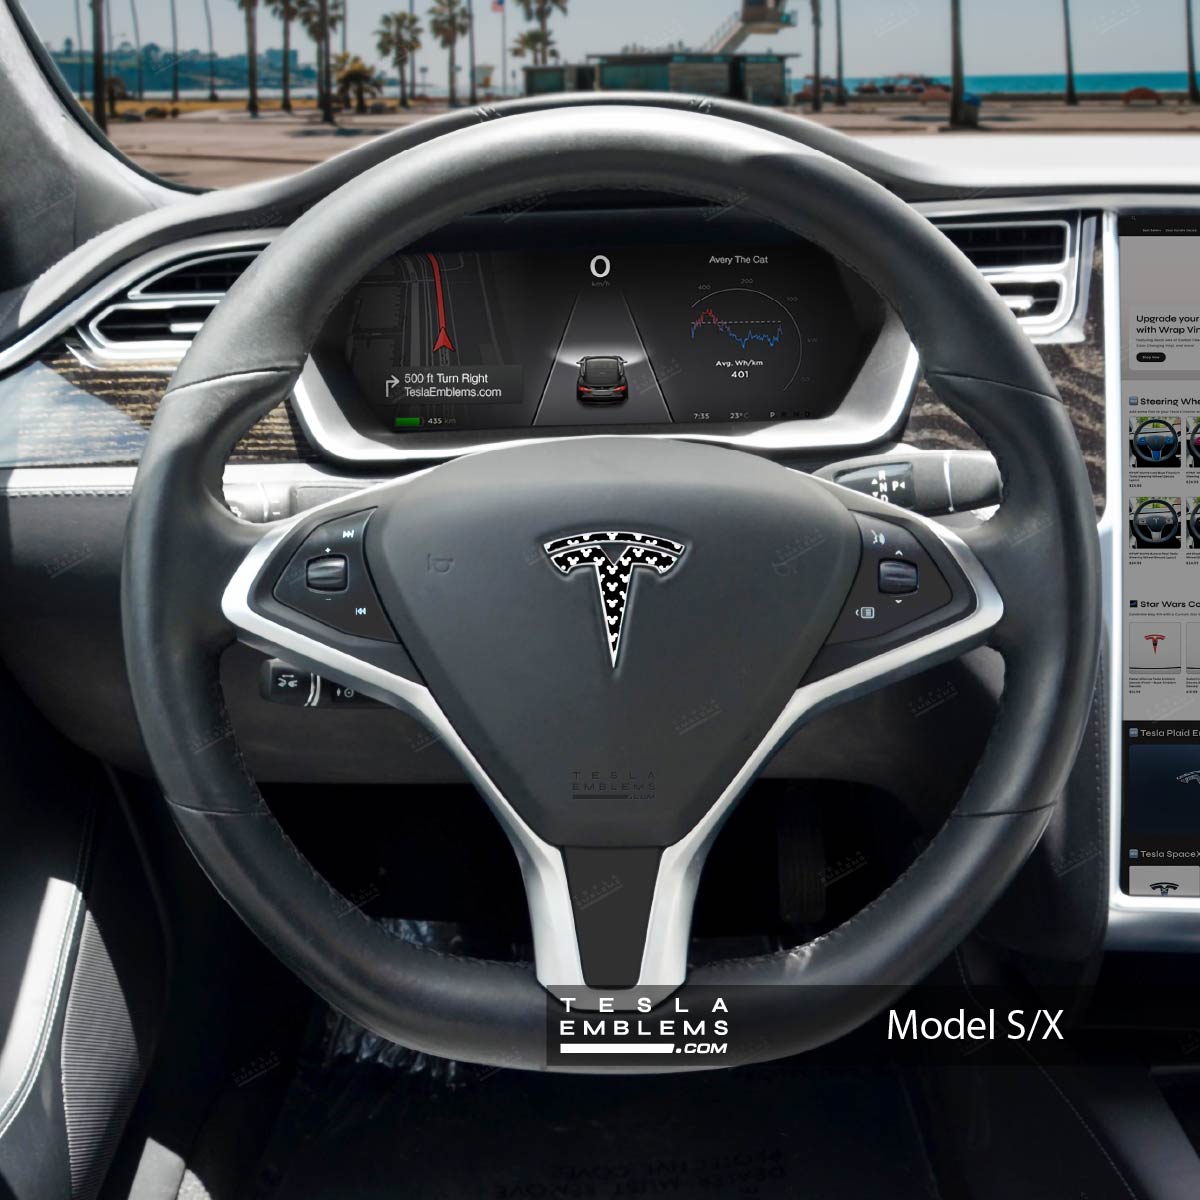 Mickey Tesla Steering Wheel Emblem Decal - Tesla Emblems